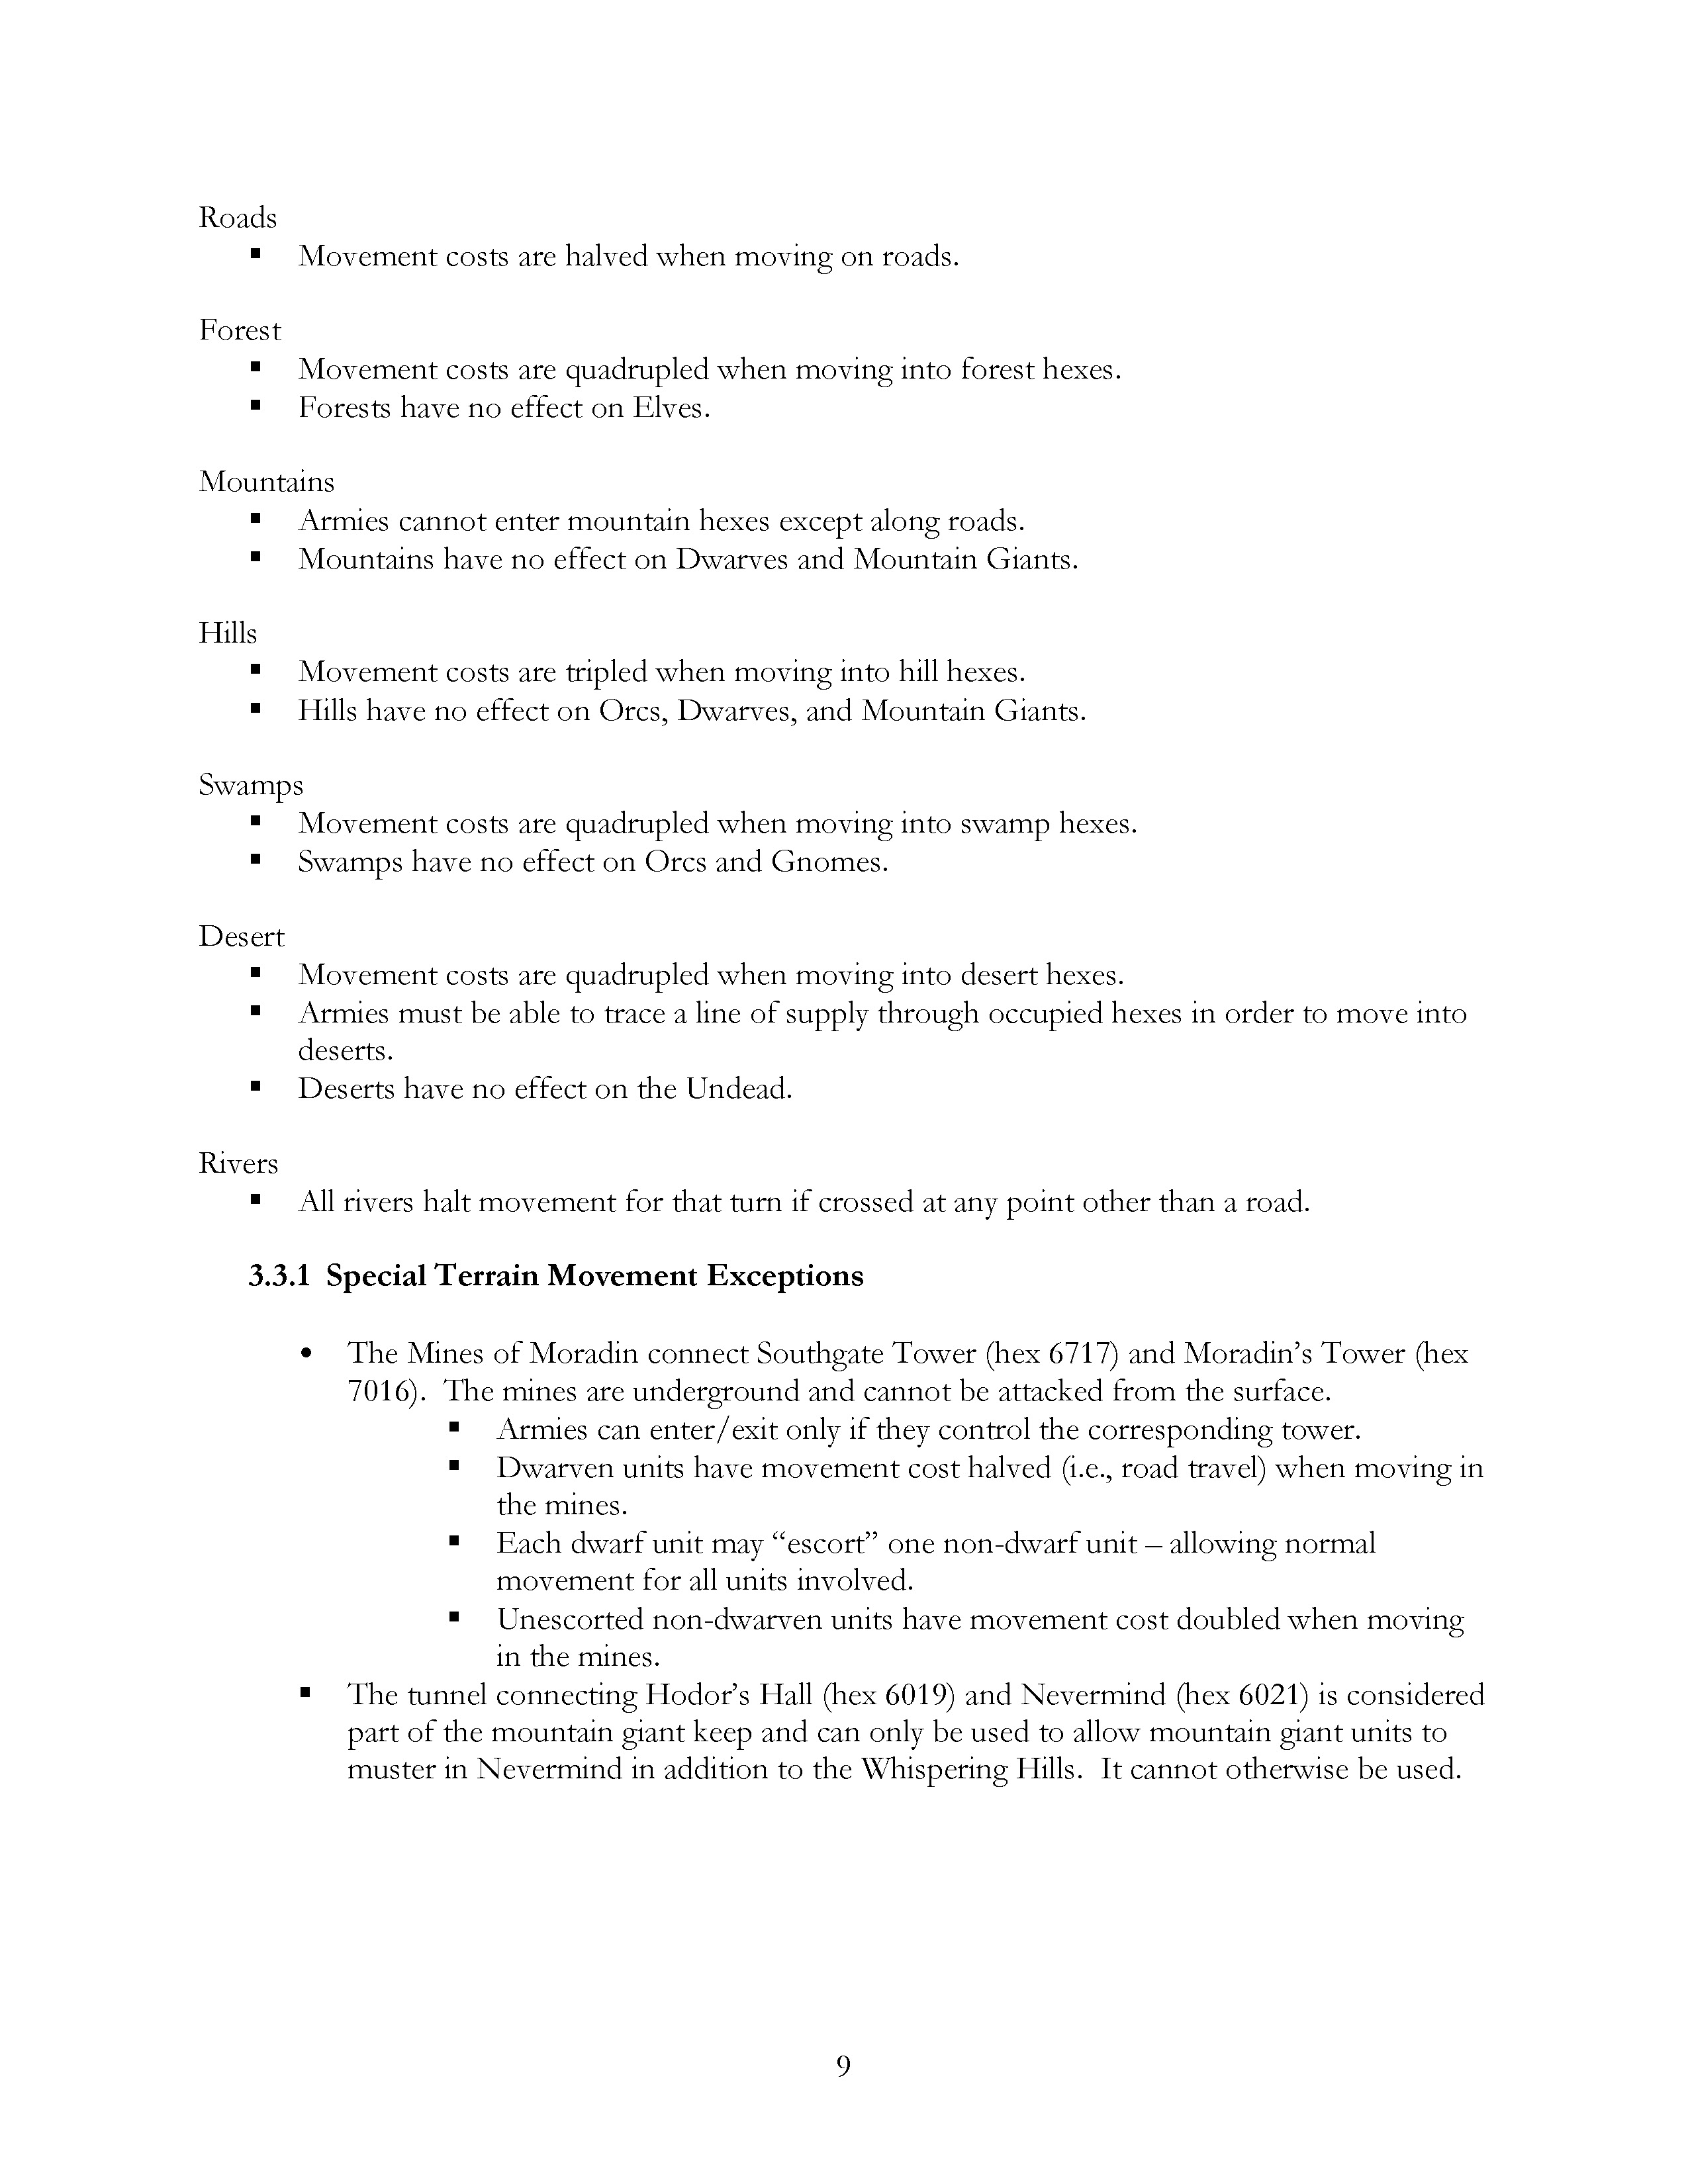 Witenagemot Rules 12a Page 10.jpg